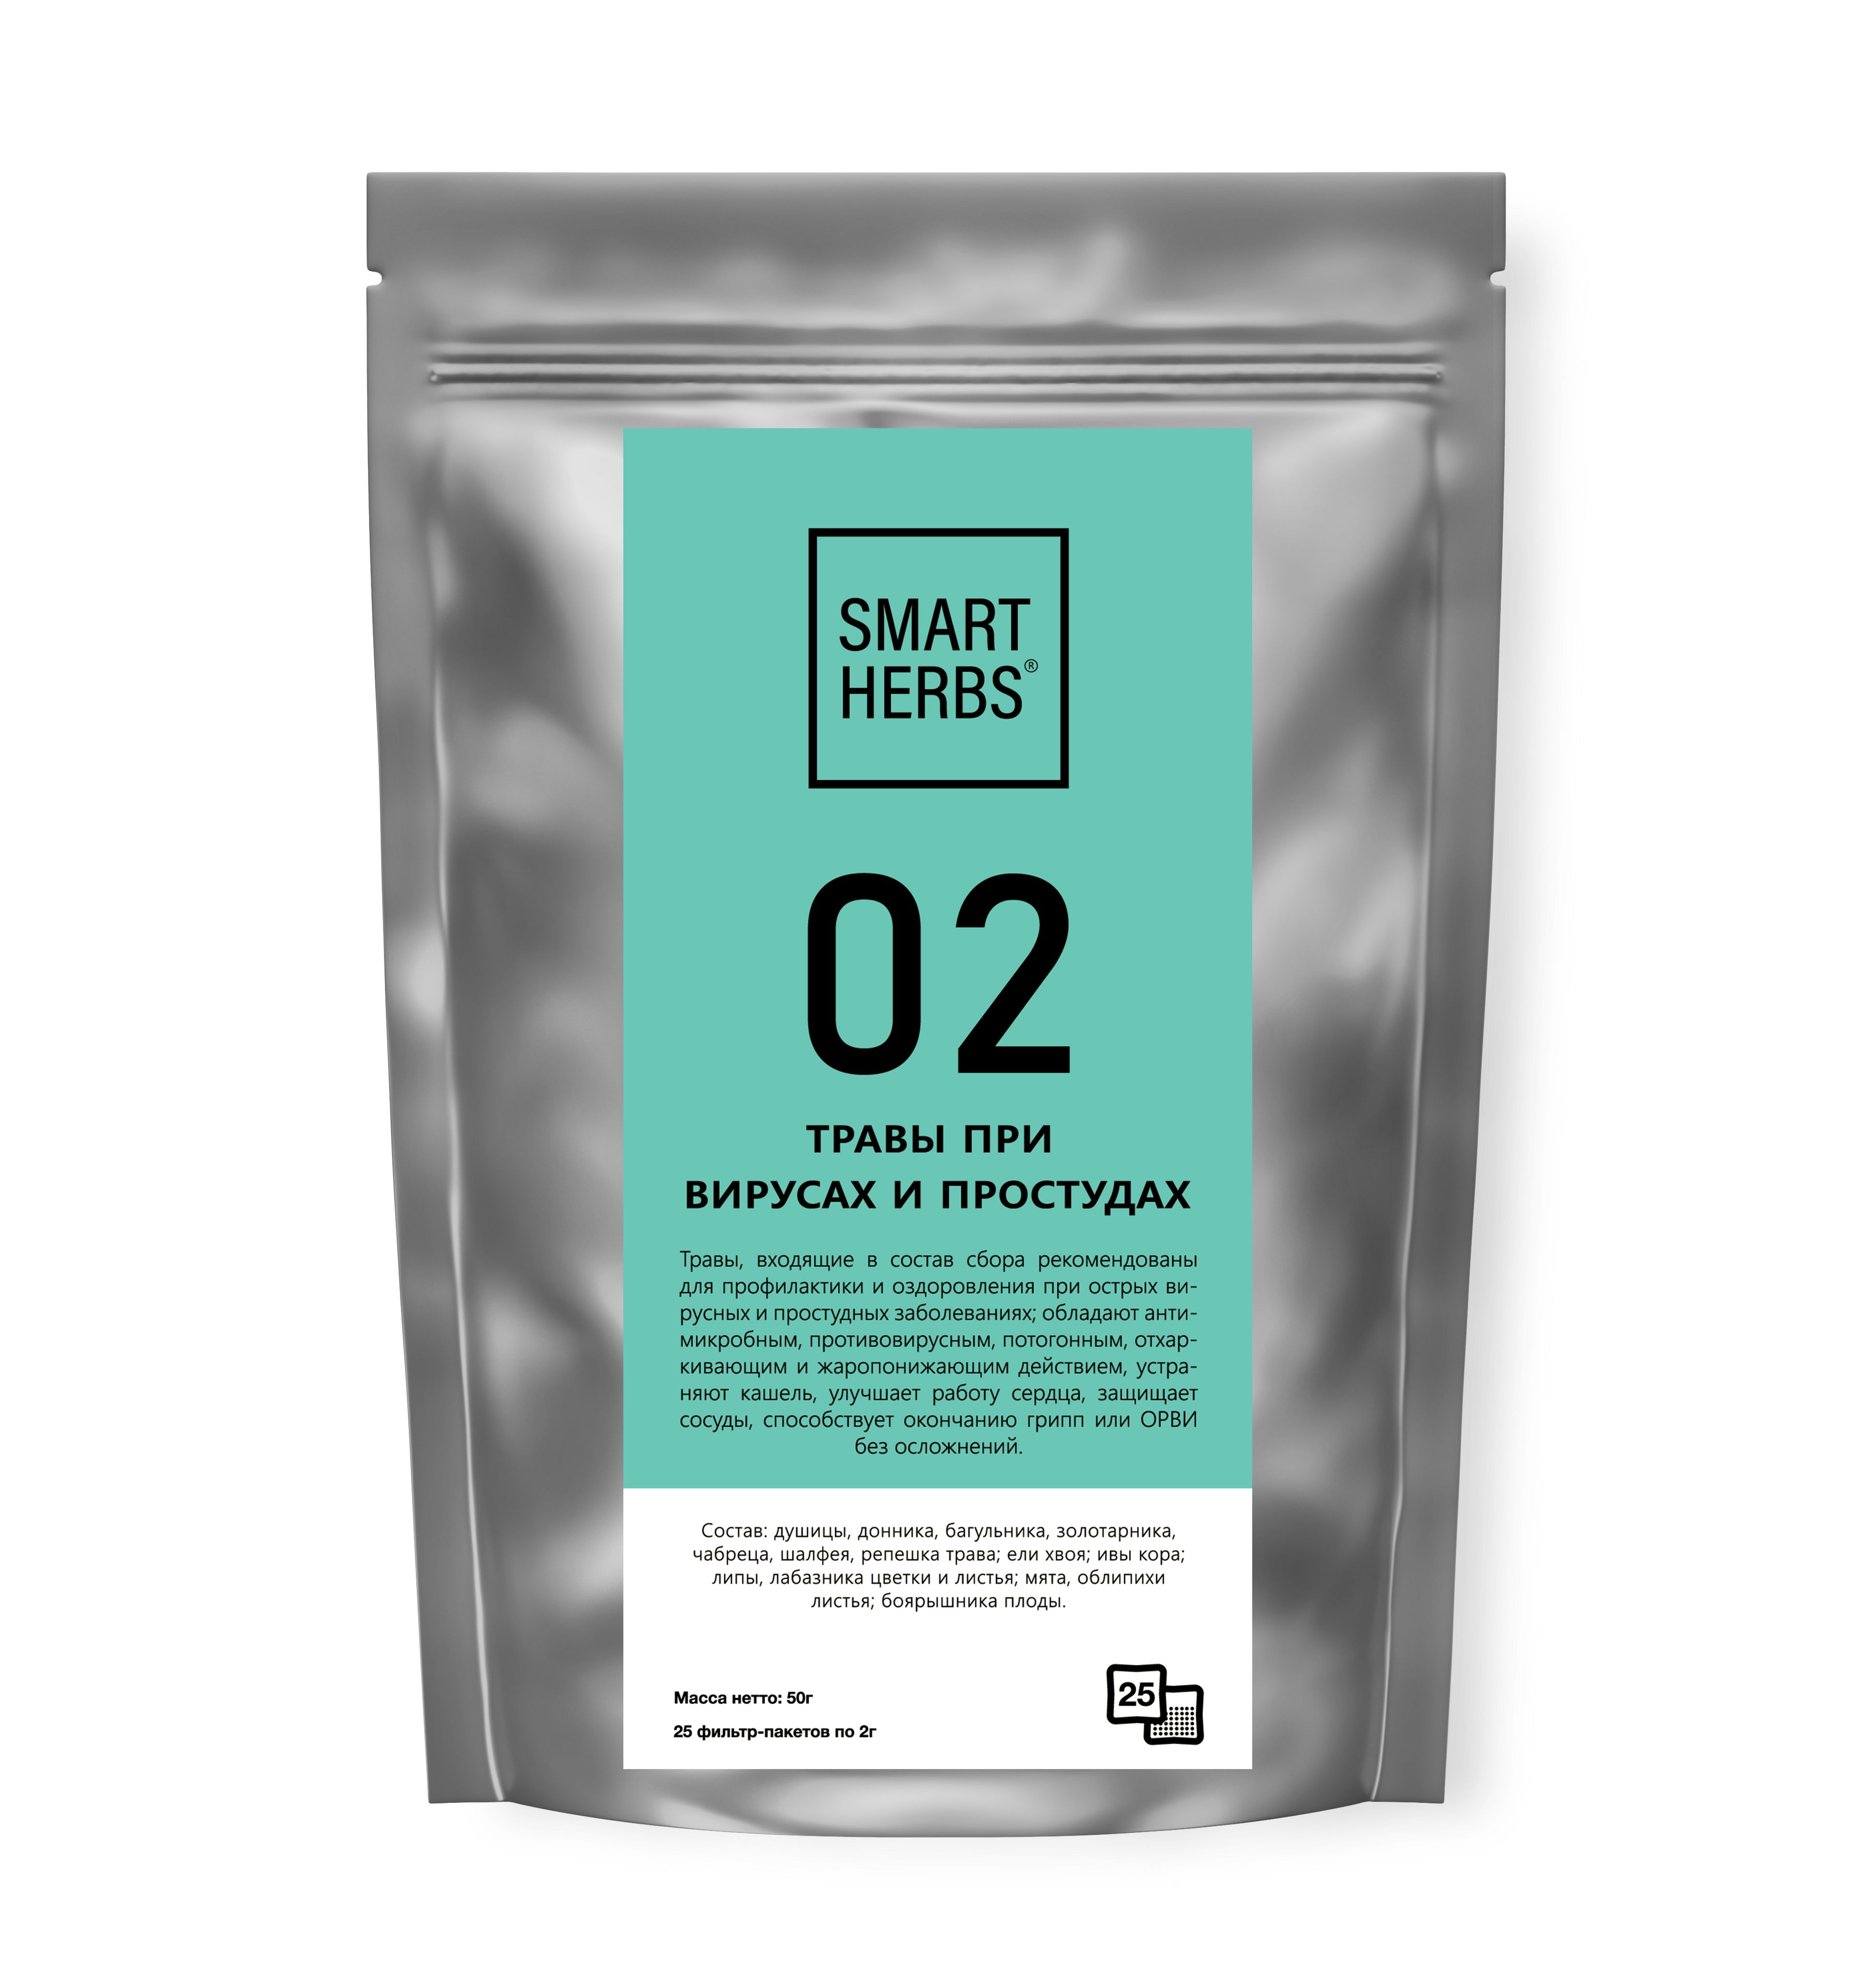 Травяной чай Biopractika smart herbs 02 травы при вирусах и простуды - фото 1